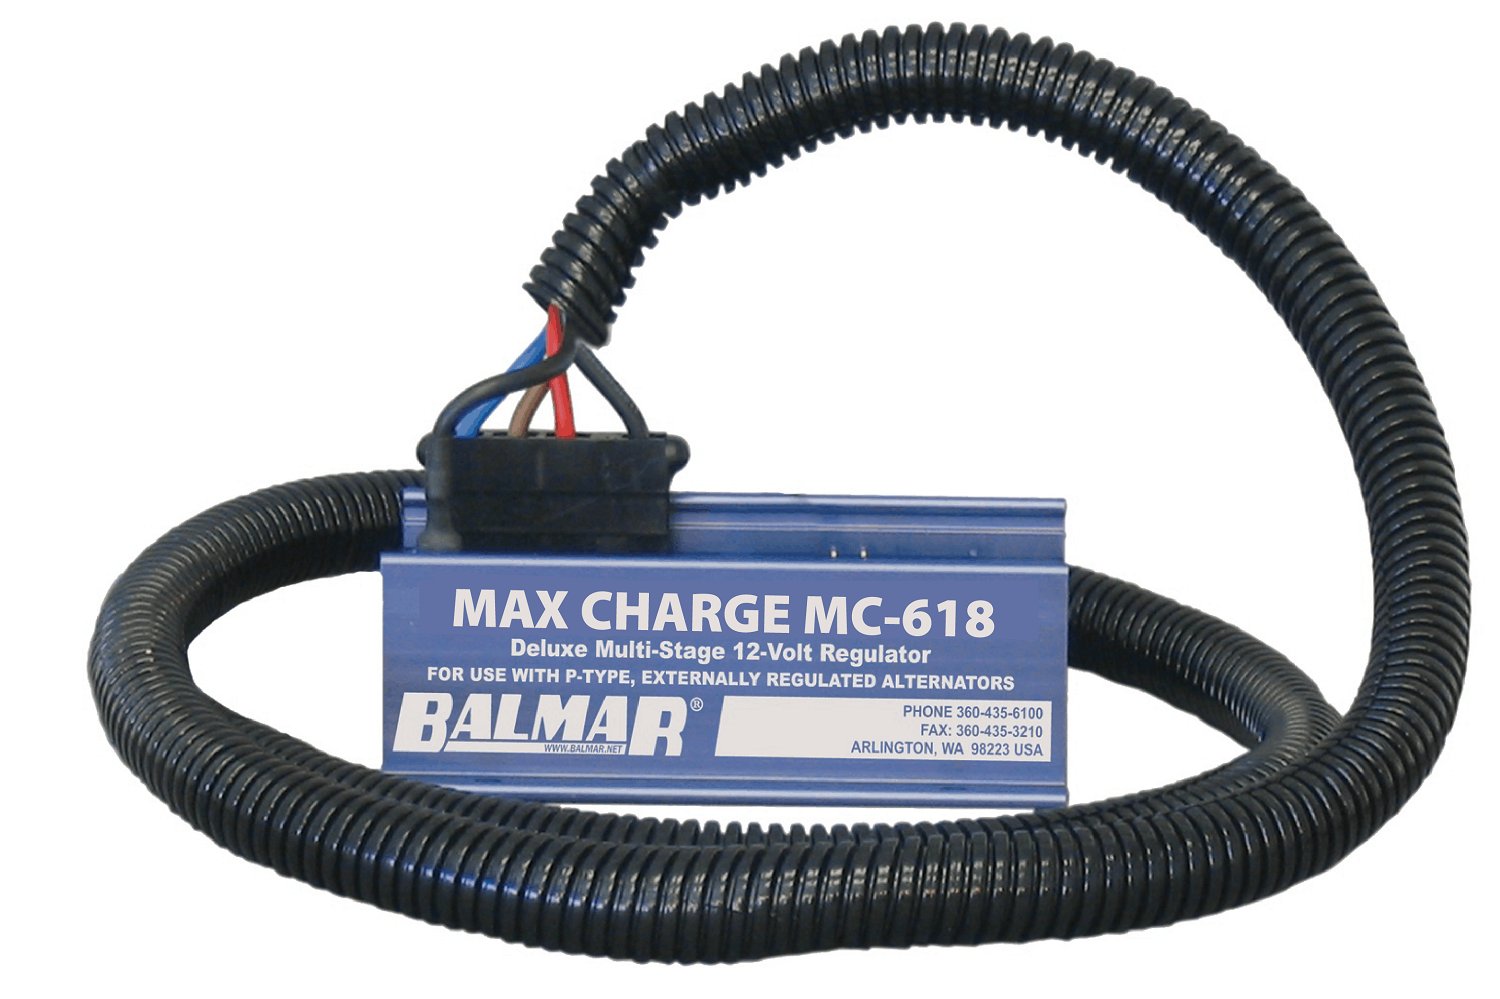 Does the Balmar MC-618 come with an external voltage sense wire?